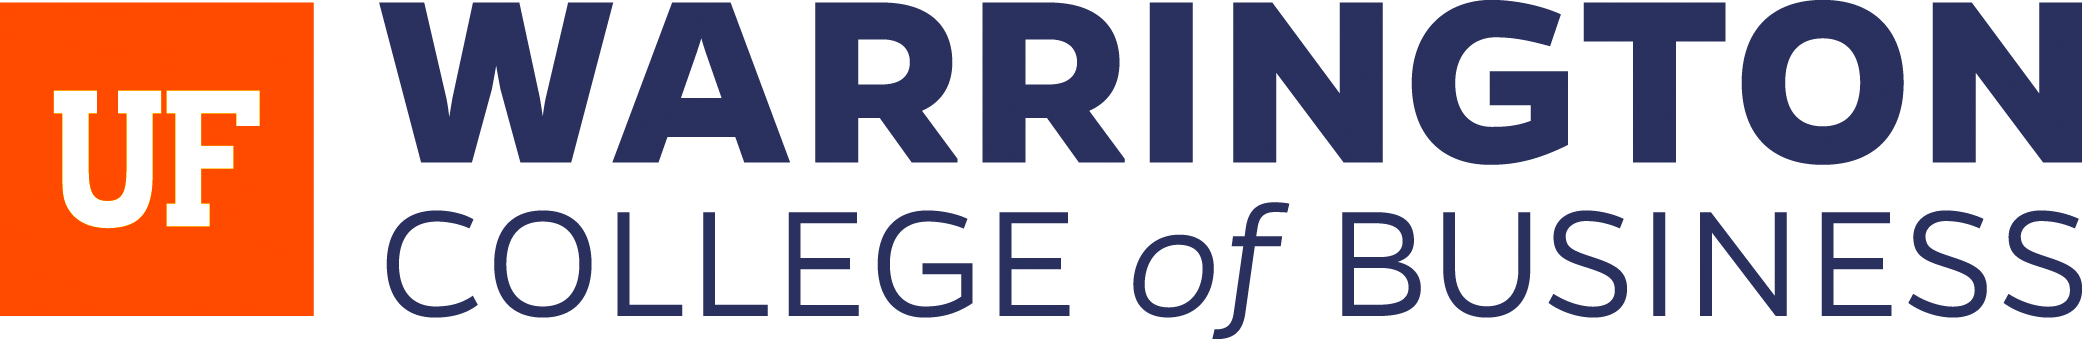 University of Florida Warrington College of Business Logo